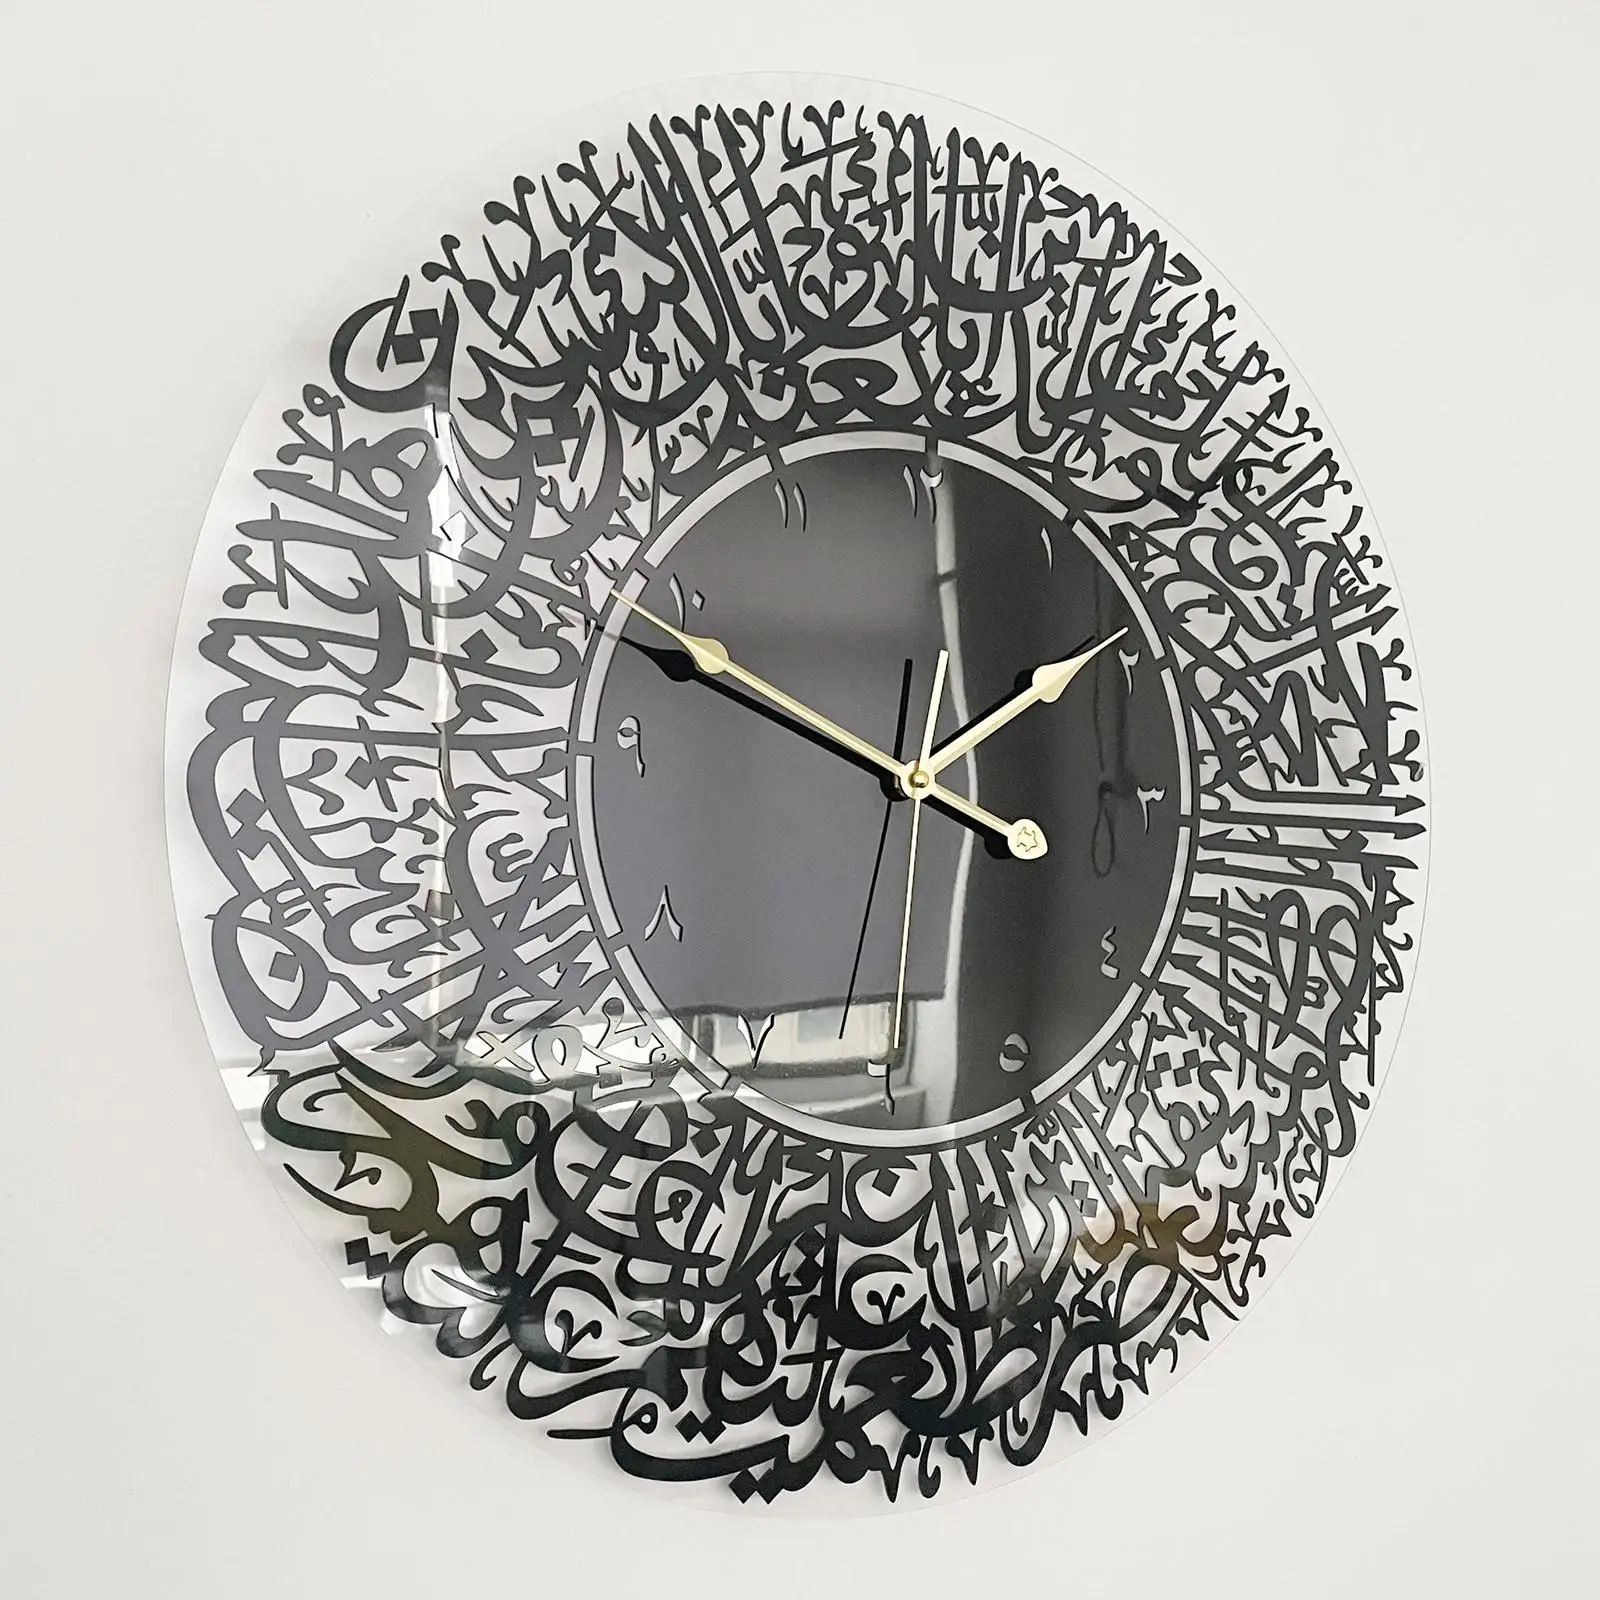 Islamic Calligraphy Wall Clock, Modern Muslim Quartz Clock  Clock Watch for Living Room Bedroom Nursery Room Eid Ramadan